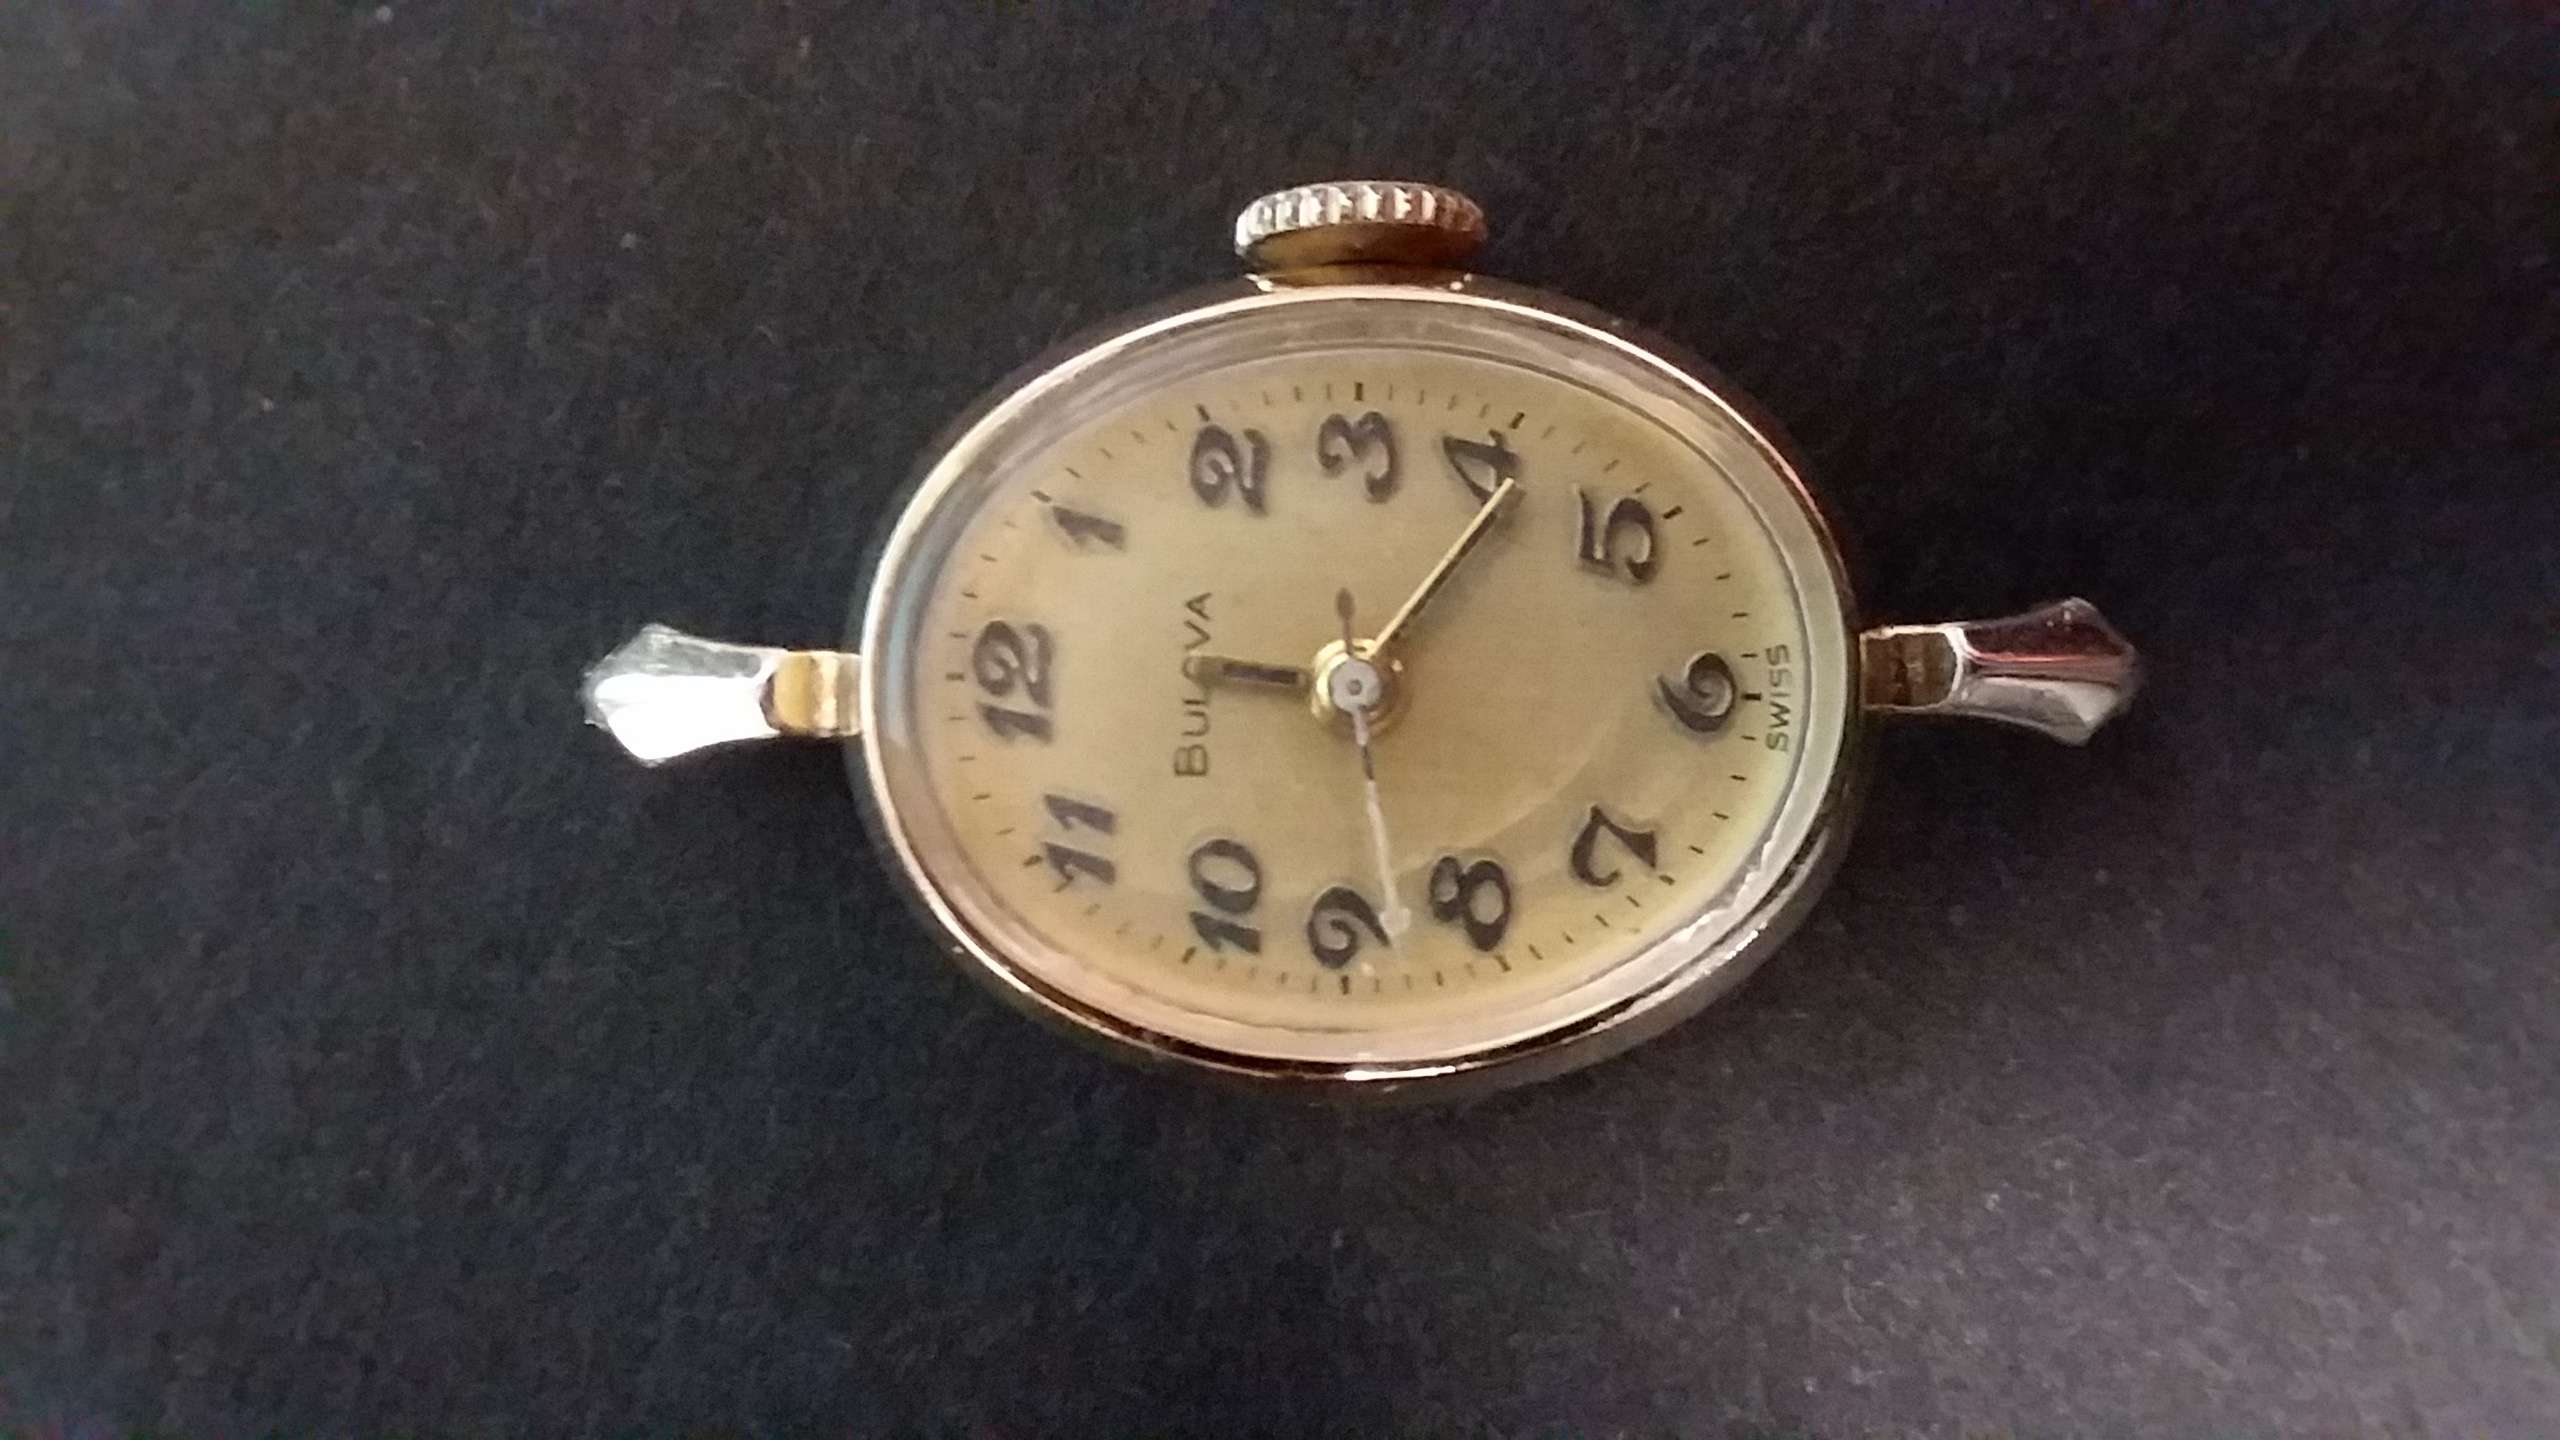 1971 Bulova watch